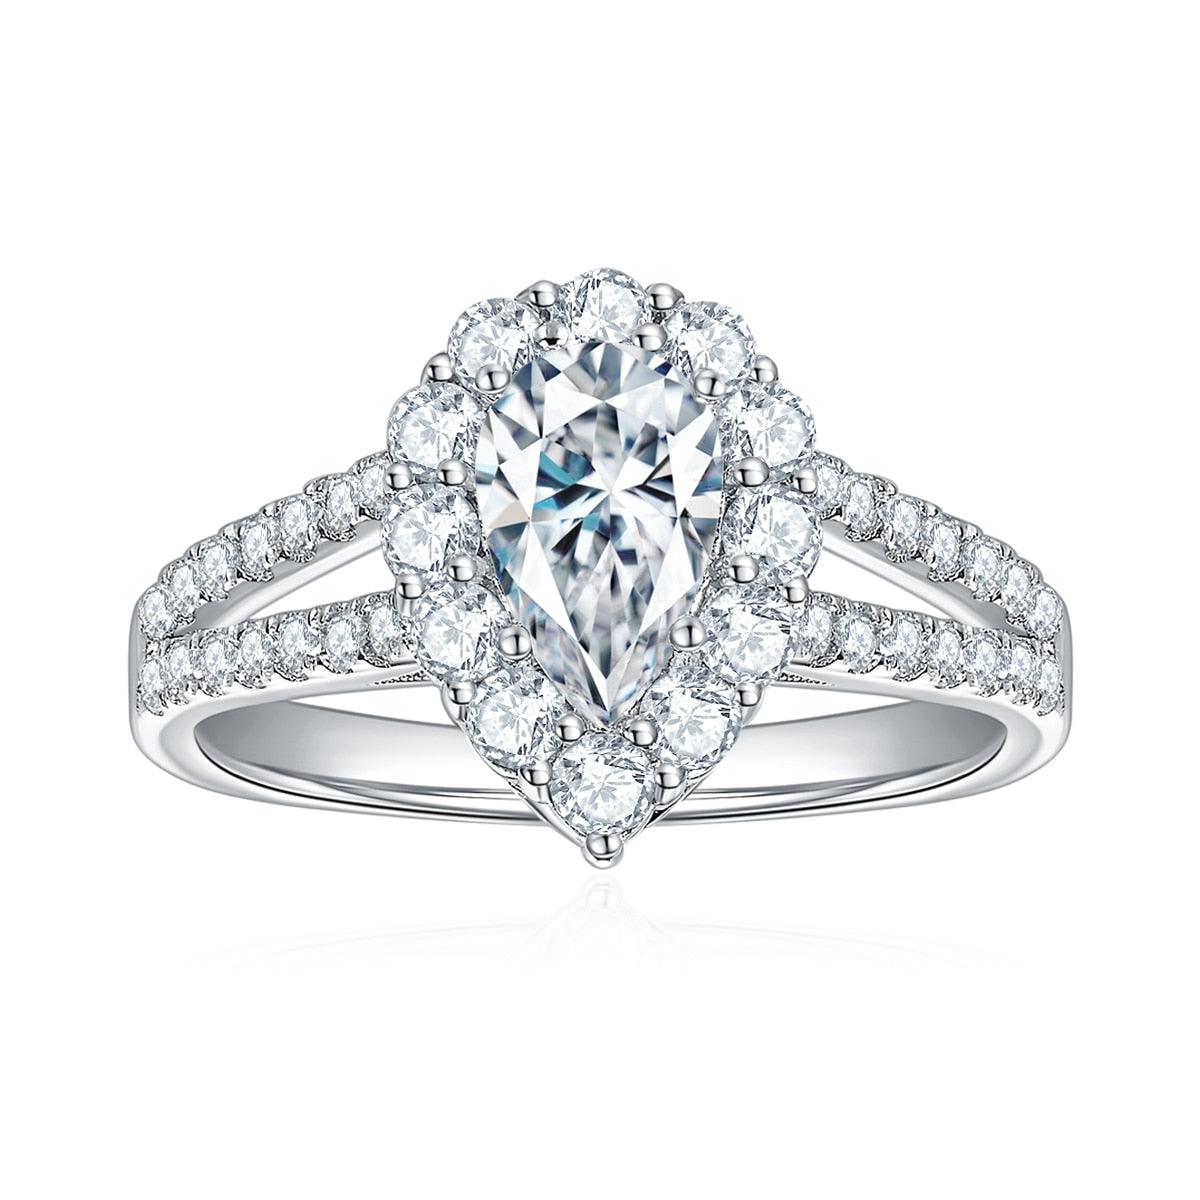 A silver tear drop halo split shank engagement ring.